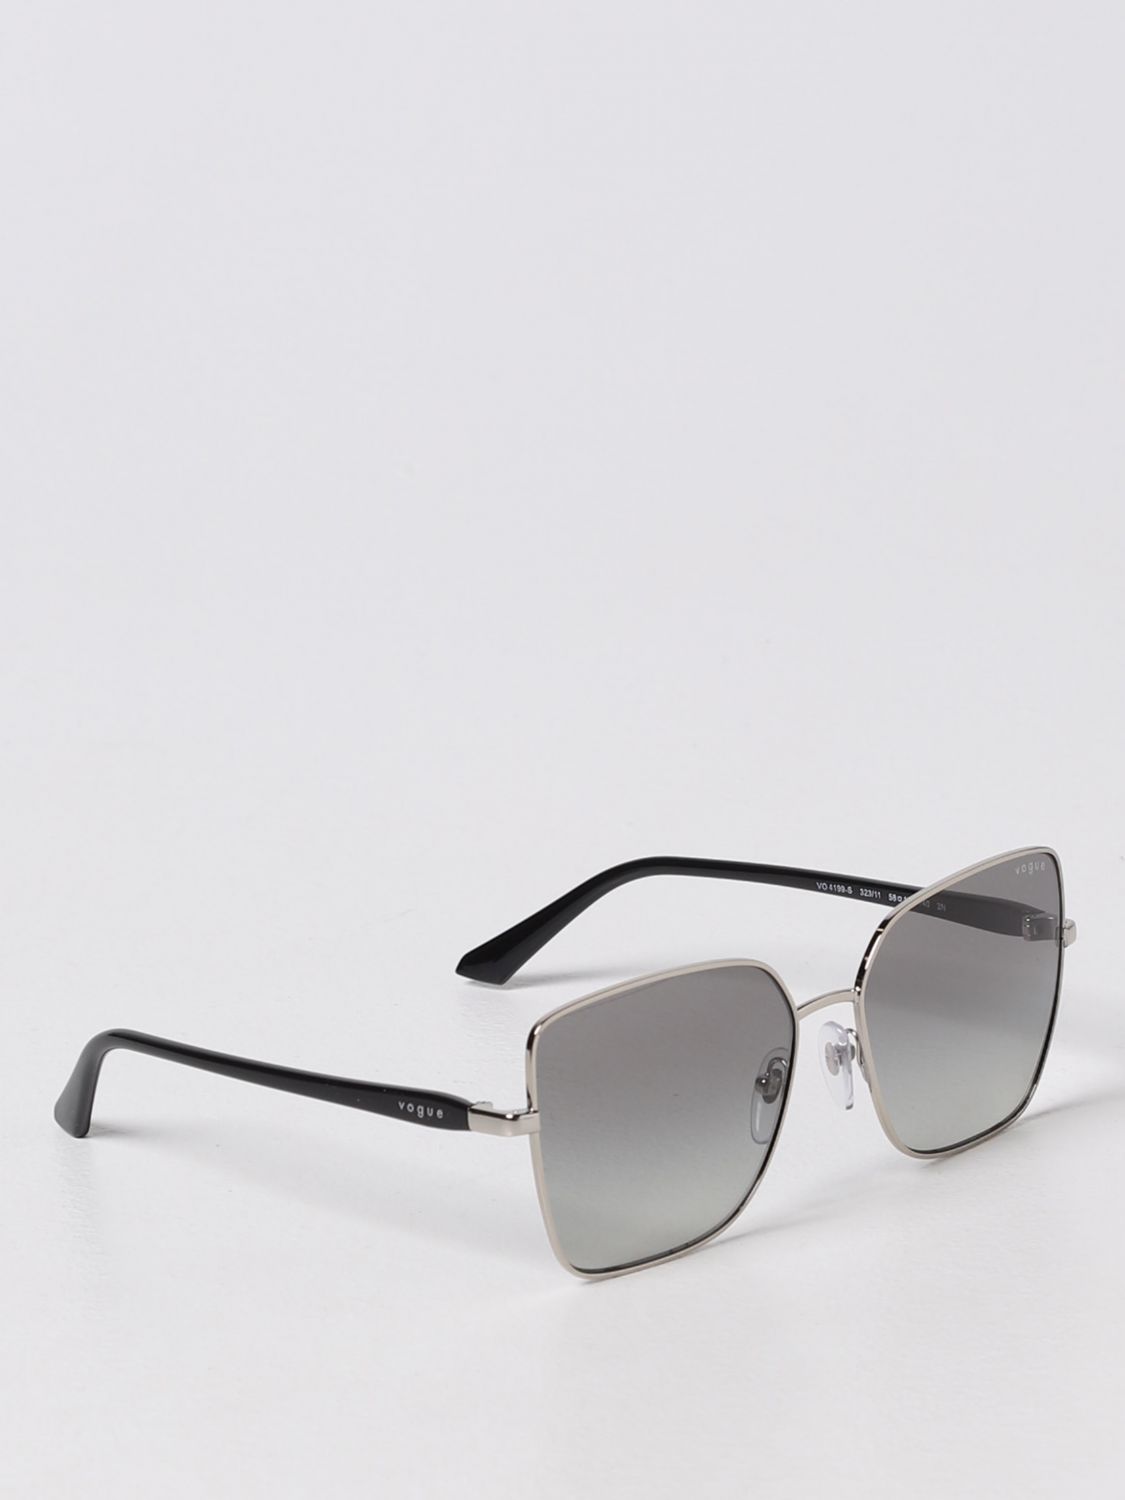 Glasses Vogue: Vogue sunglasses in metal grey 1